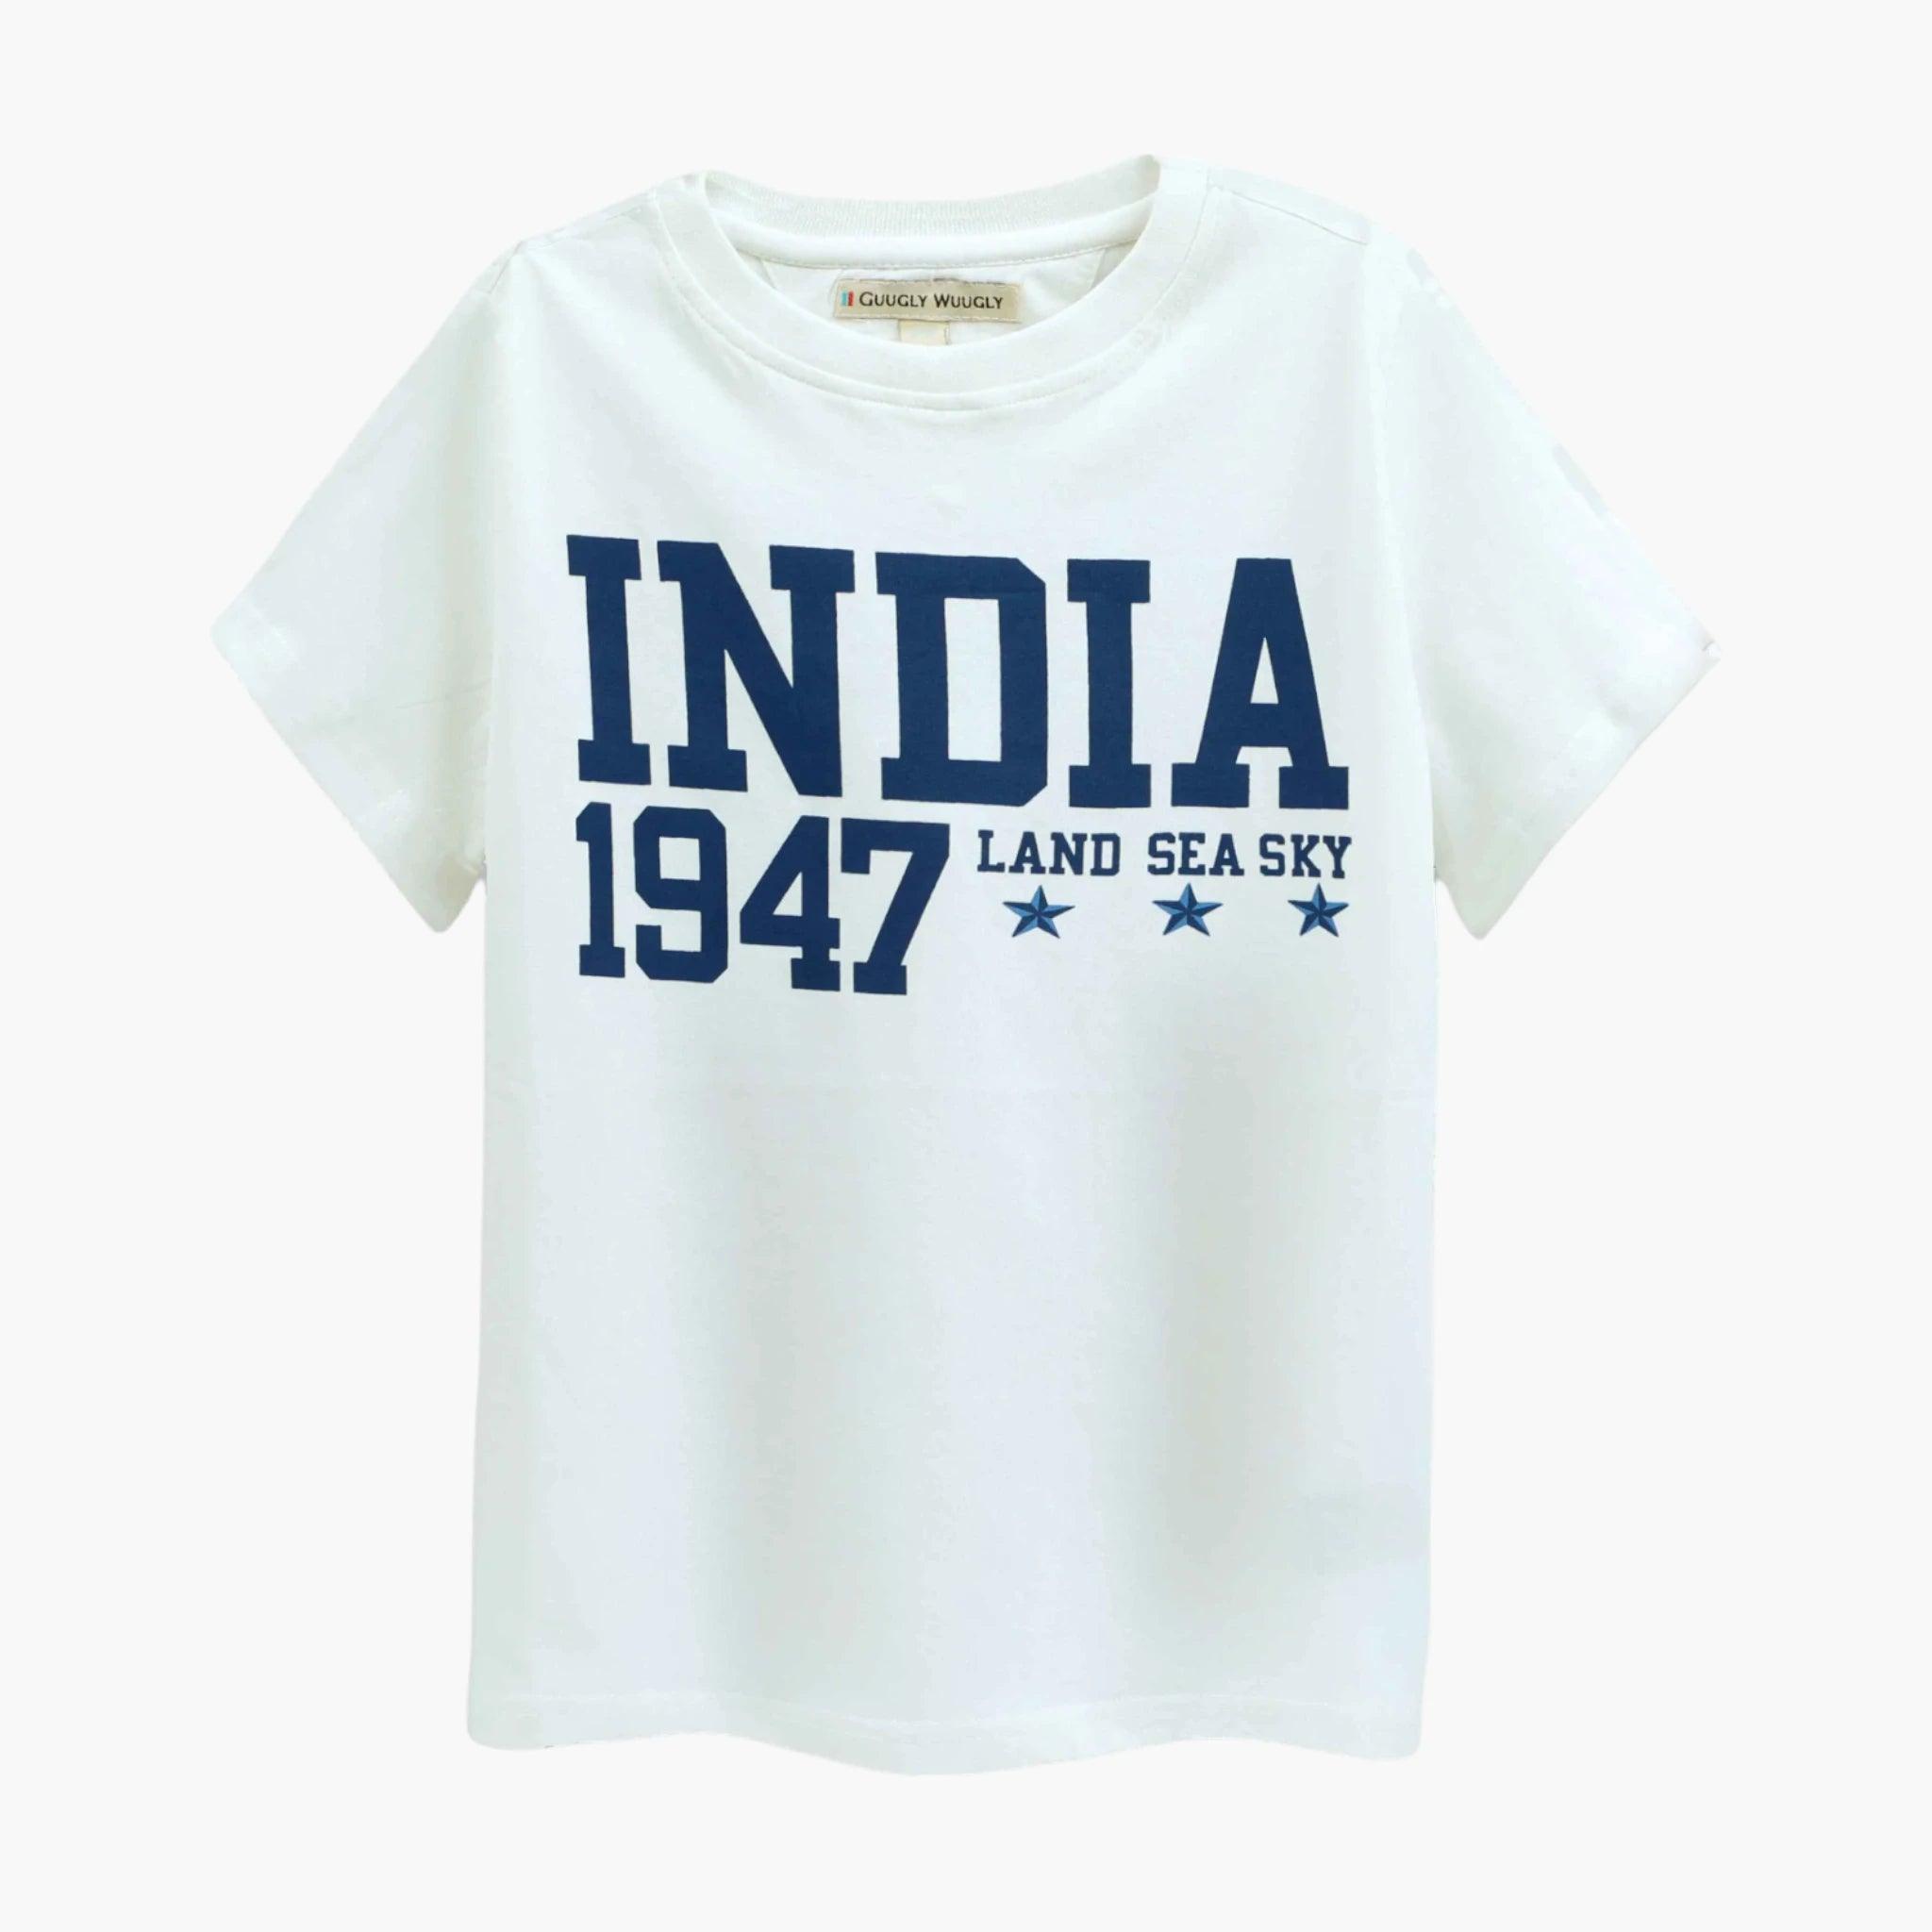 Kids India Print T-shirt - Guugly Wuugly